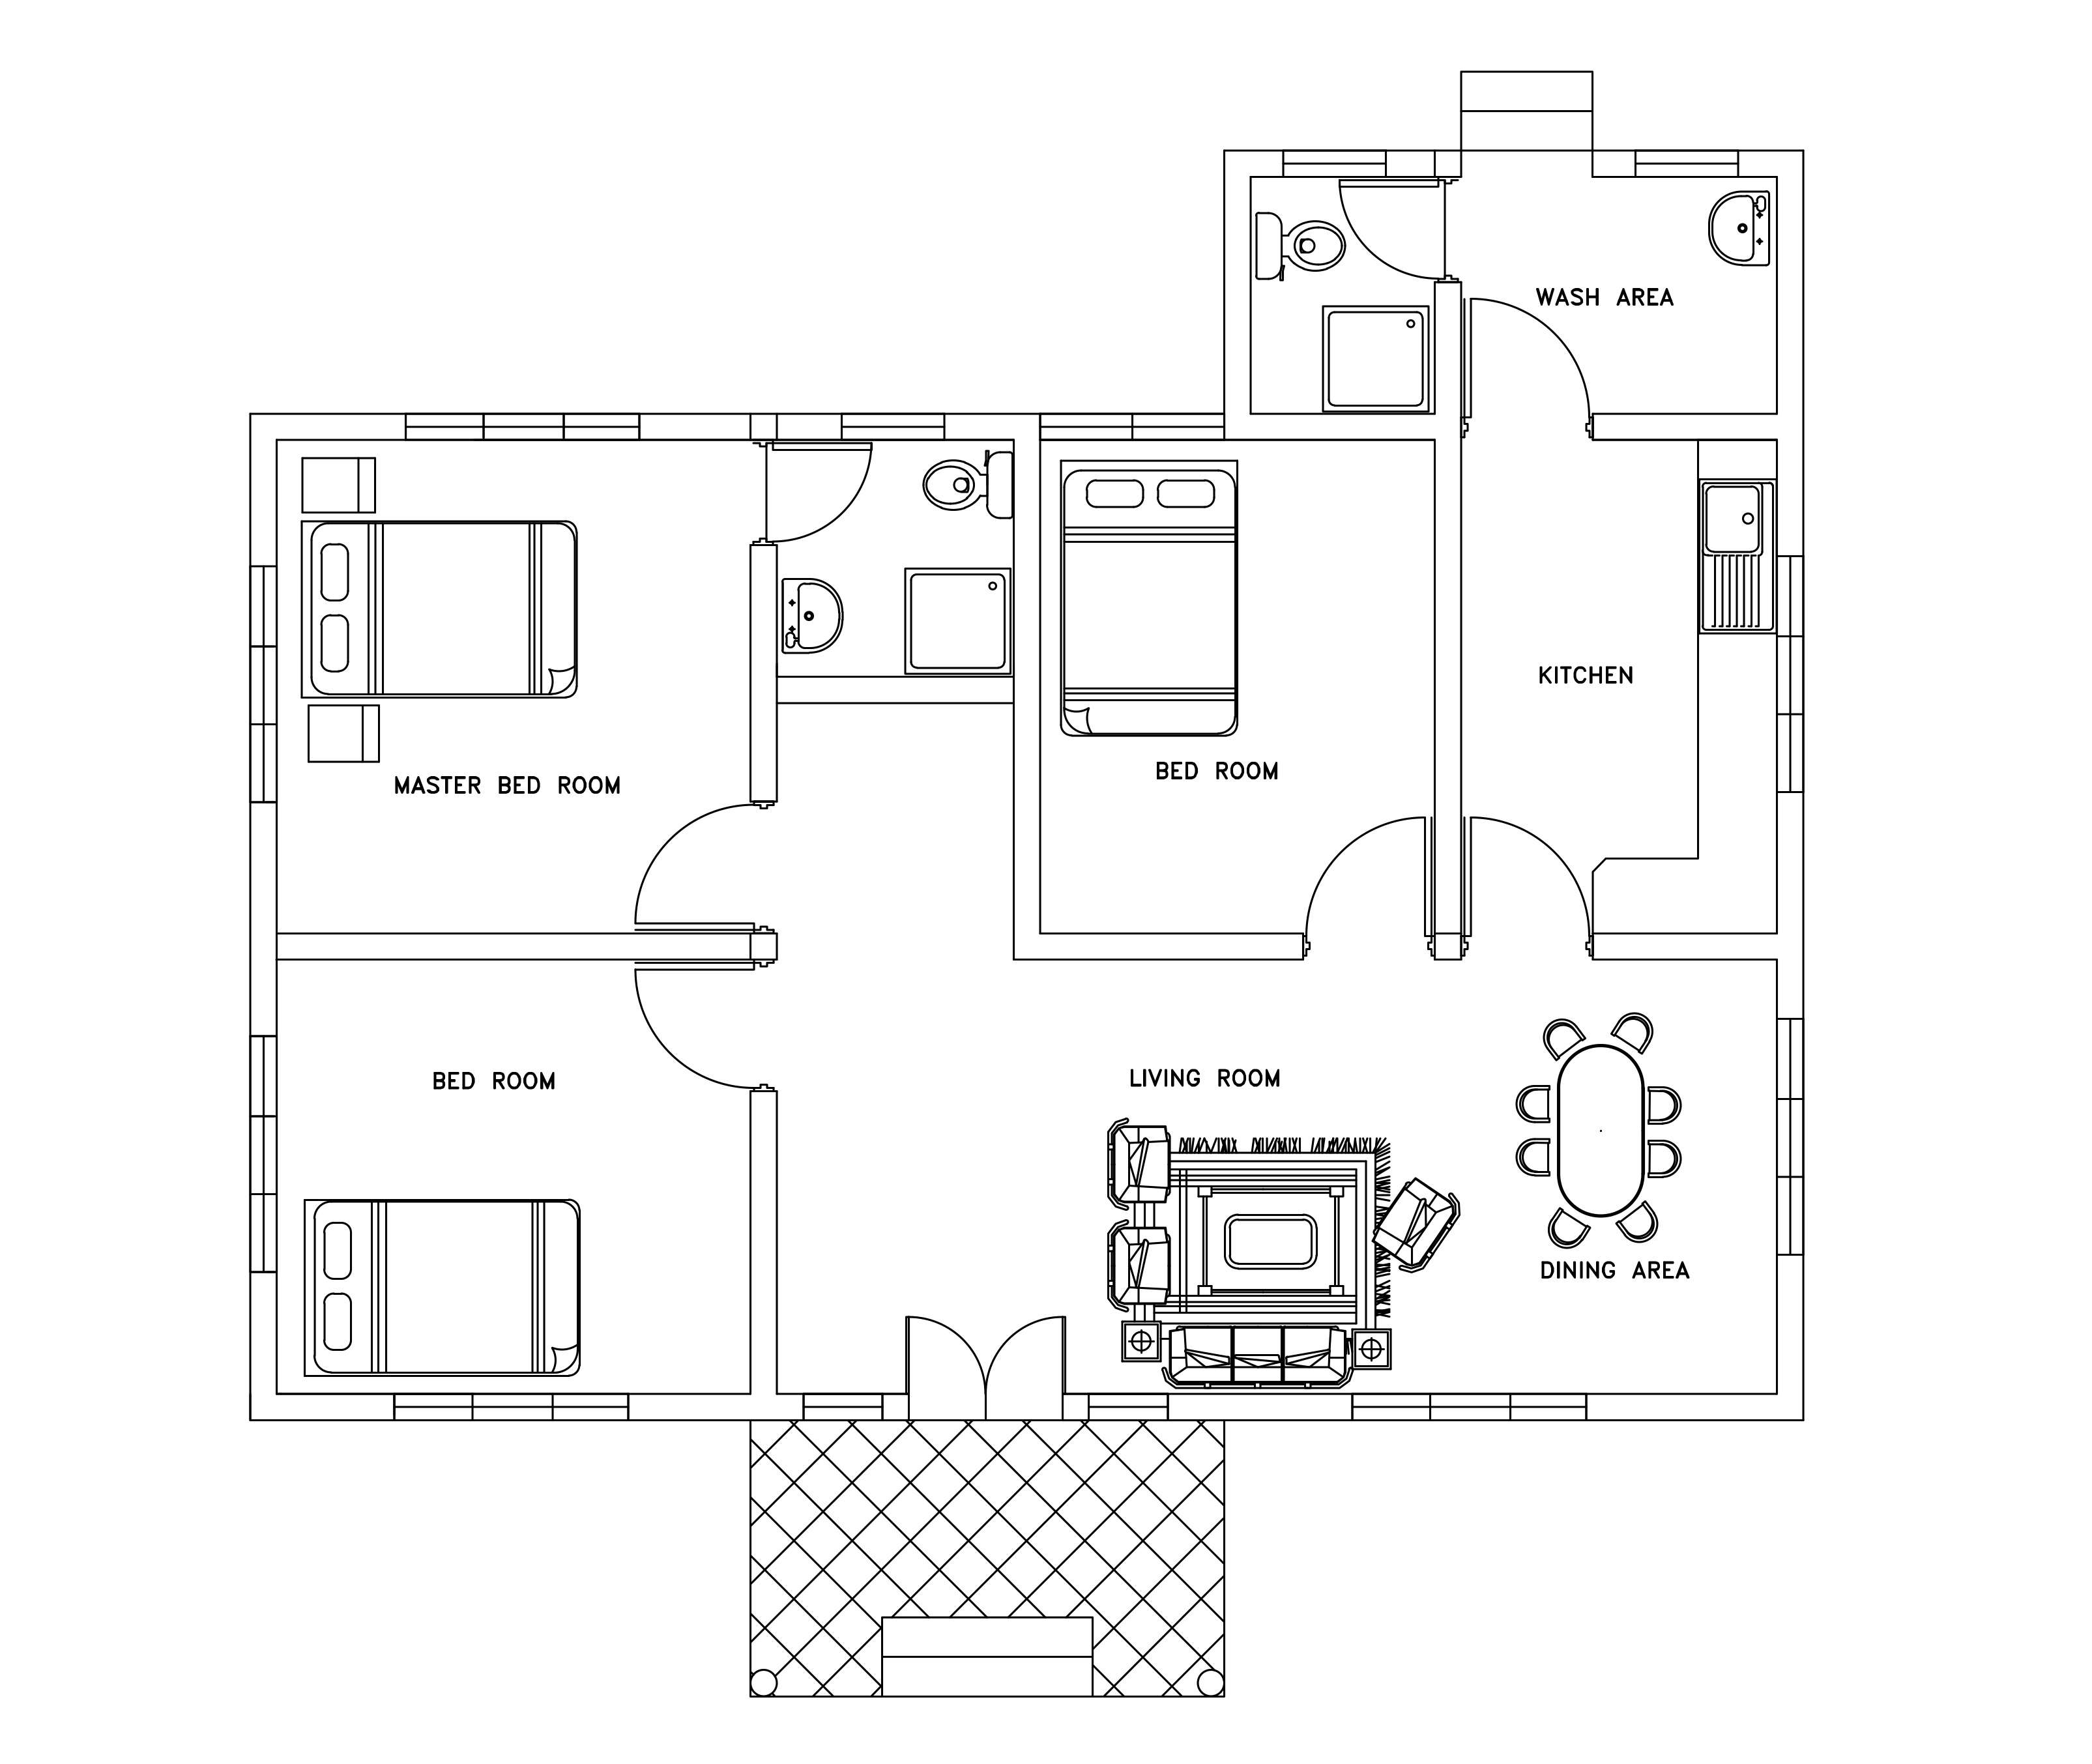 Floor Plan Dwg File Free Download - floorplans.click